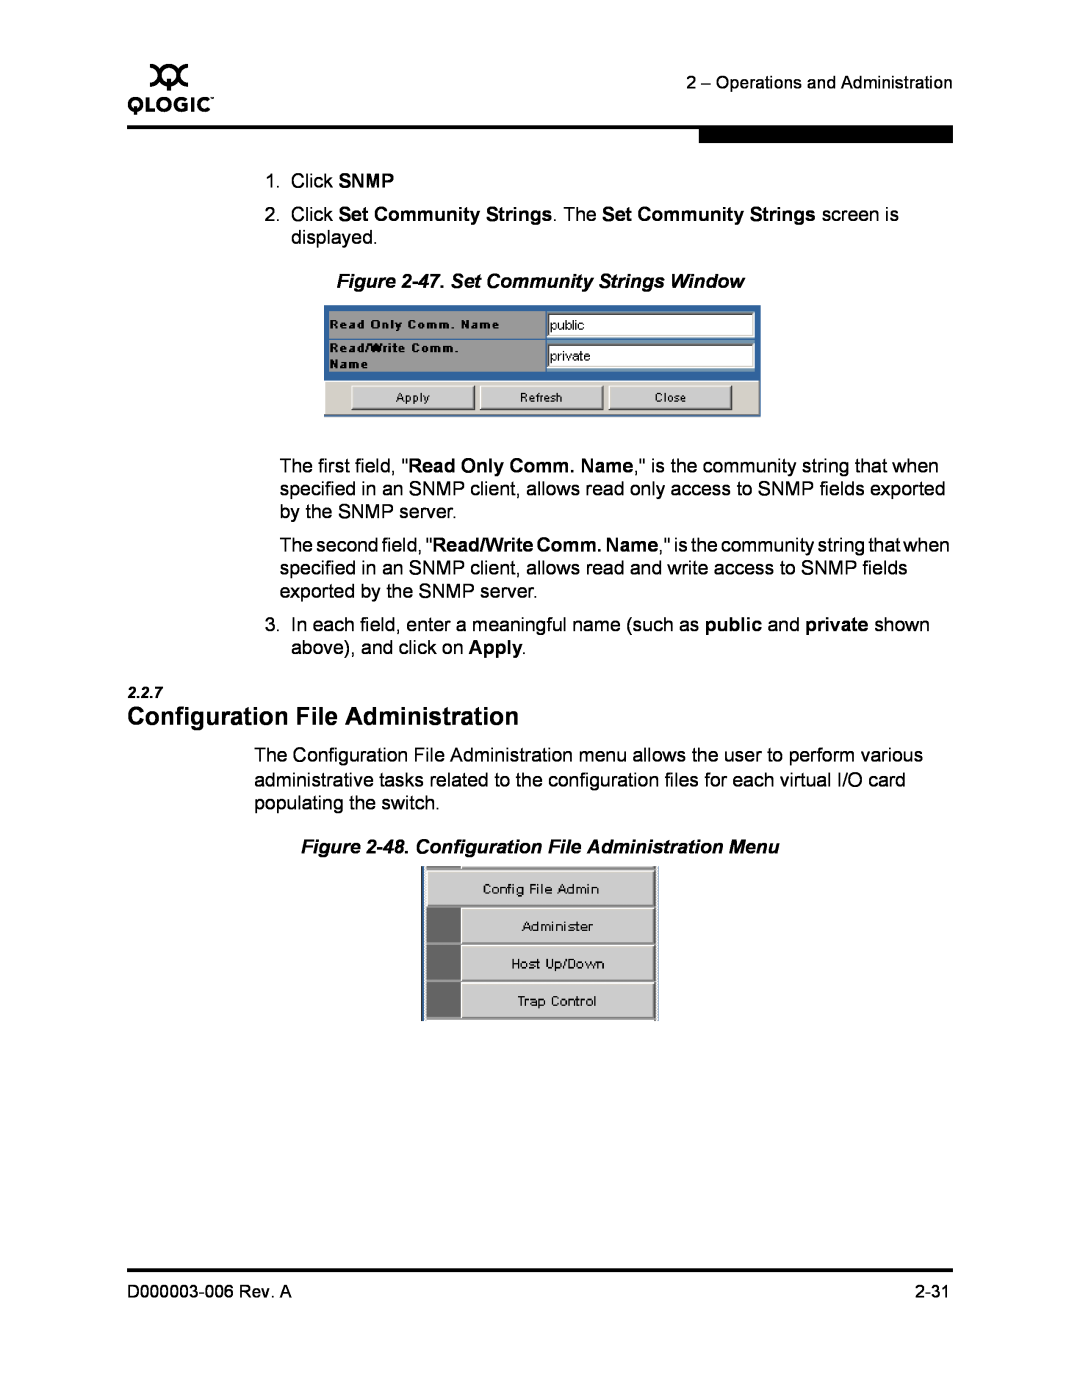 Q-Logic 9000 manual Configuration File Administration, 47. Set Community Strings Window 